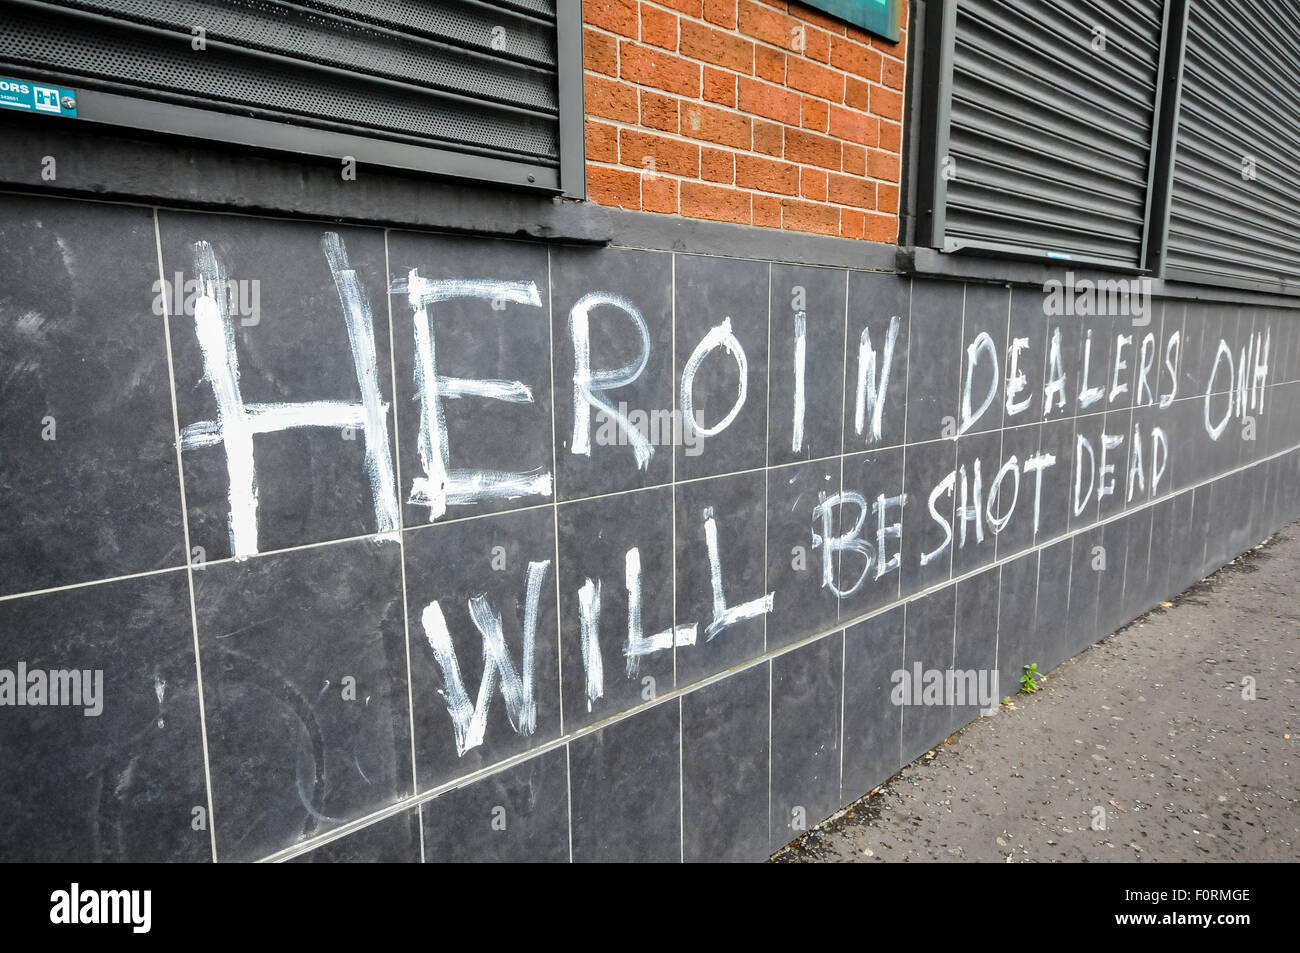 Belfast, Northern Ireland. 2 Aug 2015 - Graffiti has appeared in West Belfast warning 'Heroin Dealers will be shot dead' Stock Photo